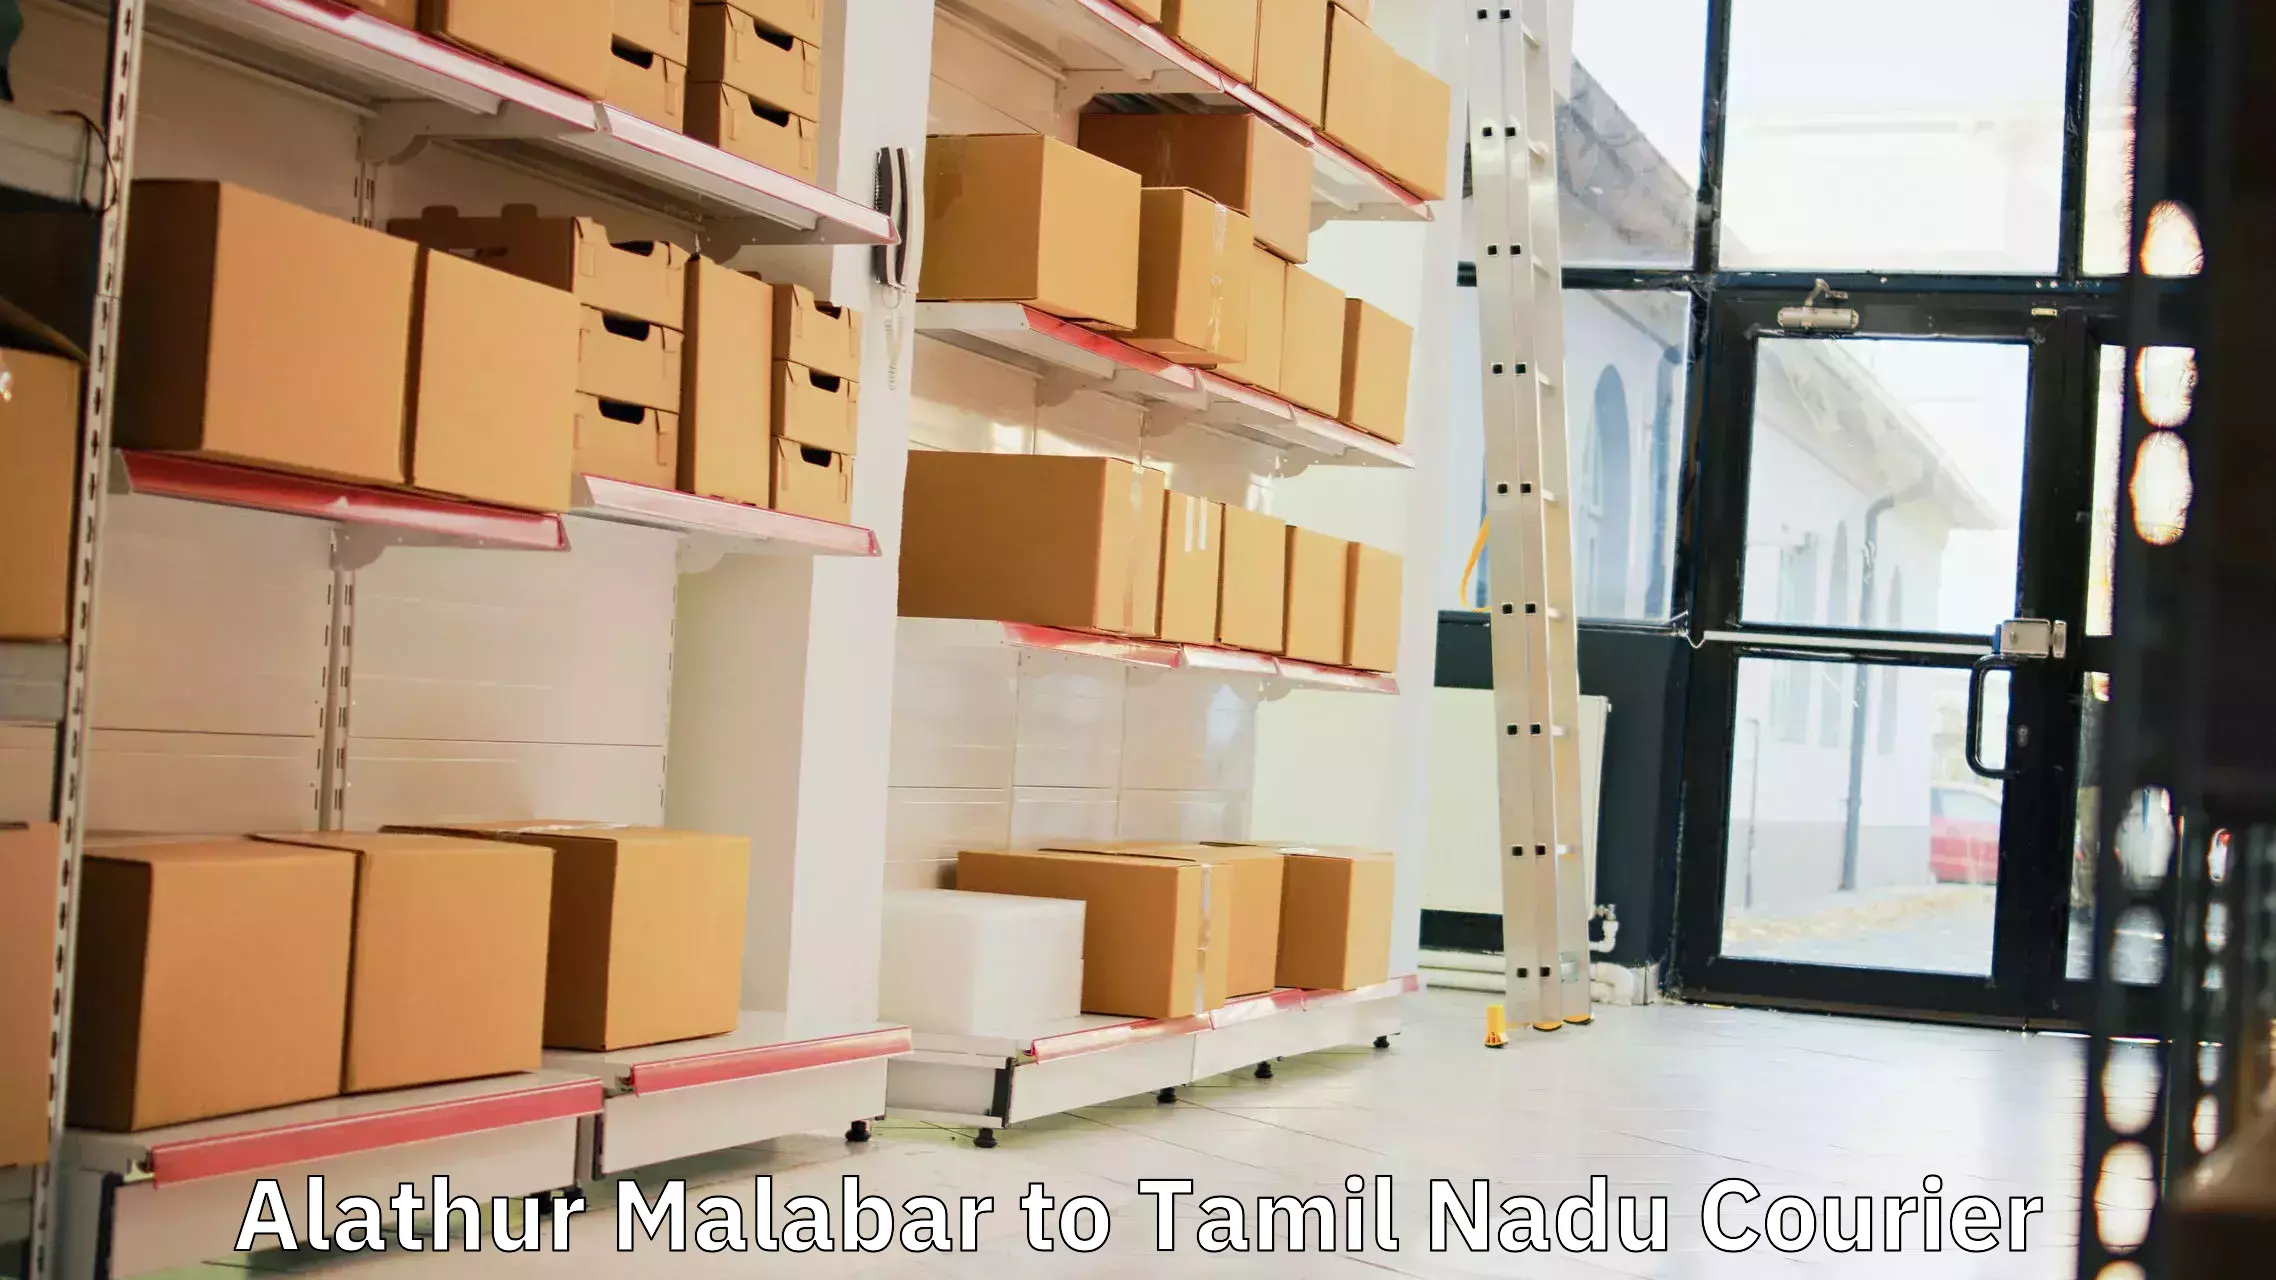 Medical delivery services Alathur Malabar to Thiruvadanai